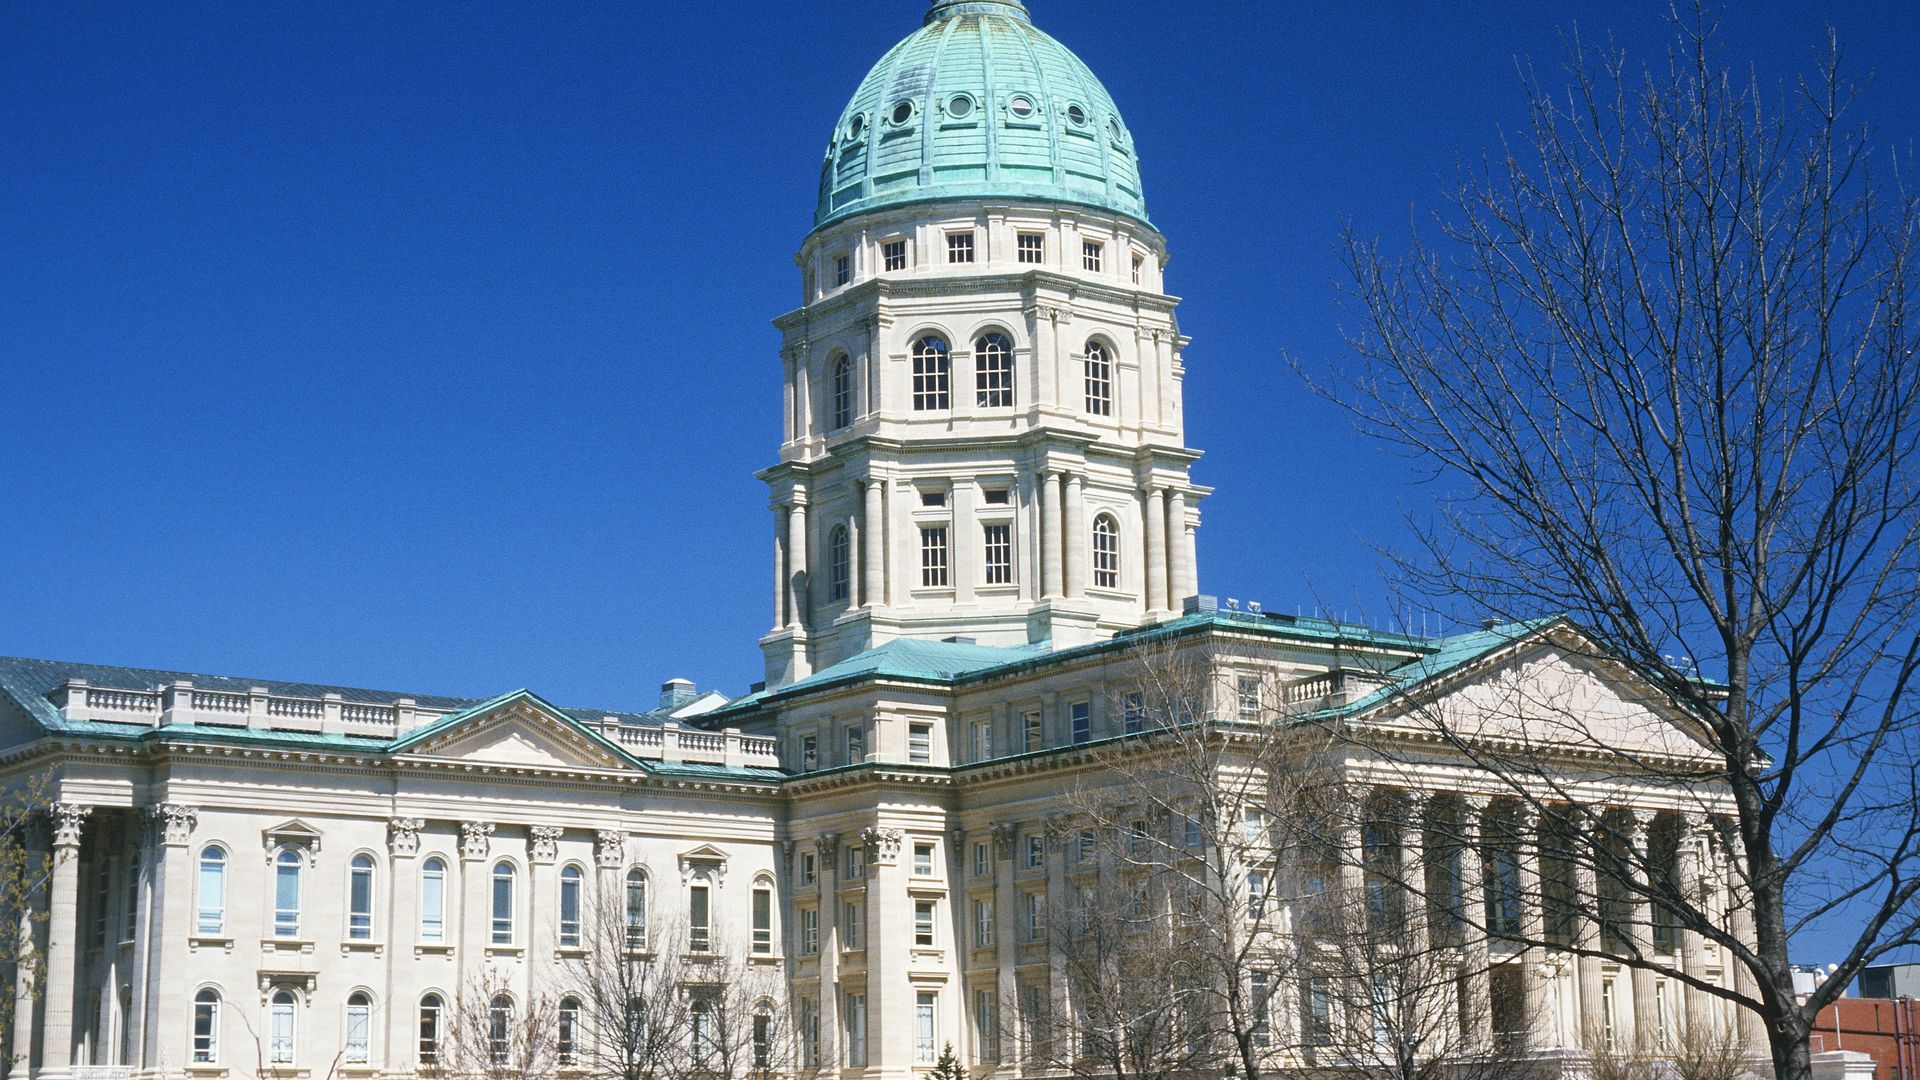 State Capitol of Kansas, Topeka